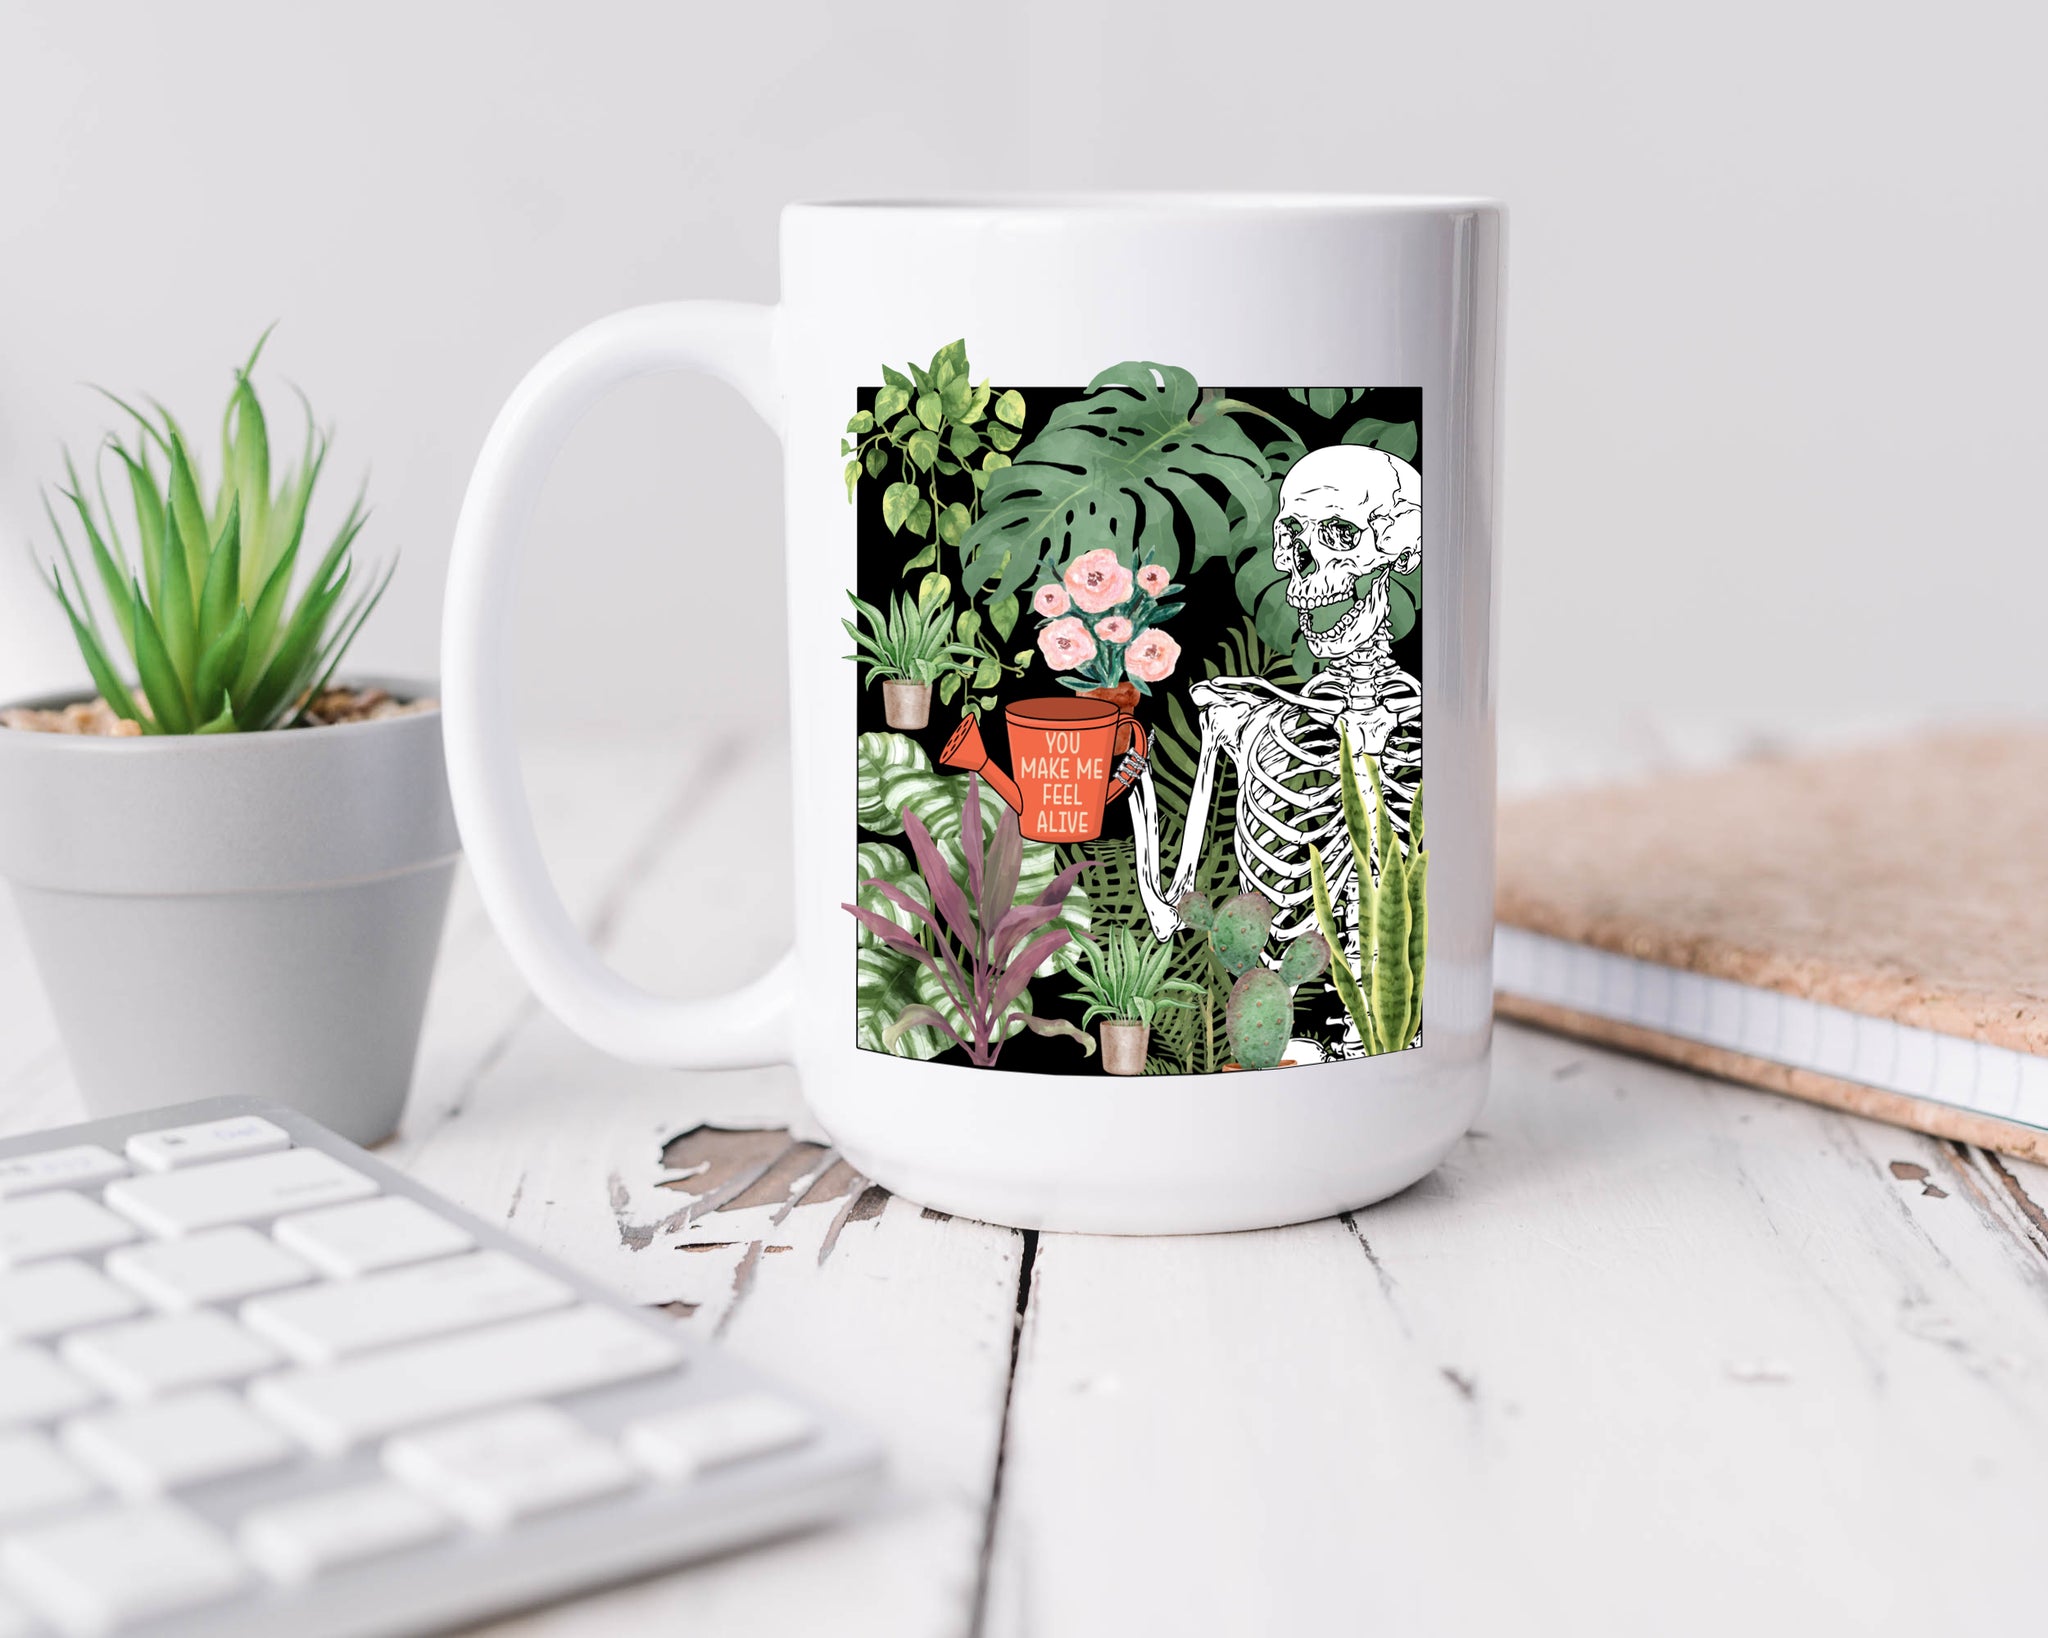 Plant Mama Coffee Mugs